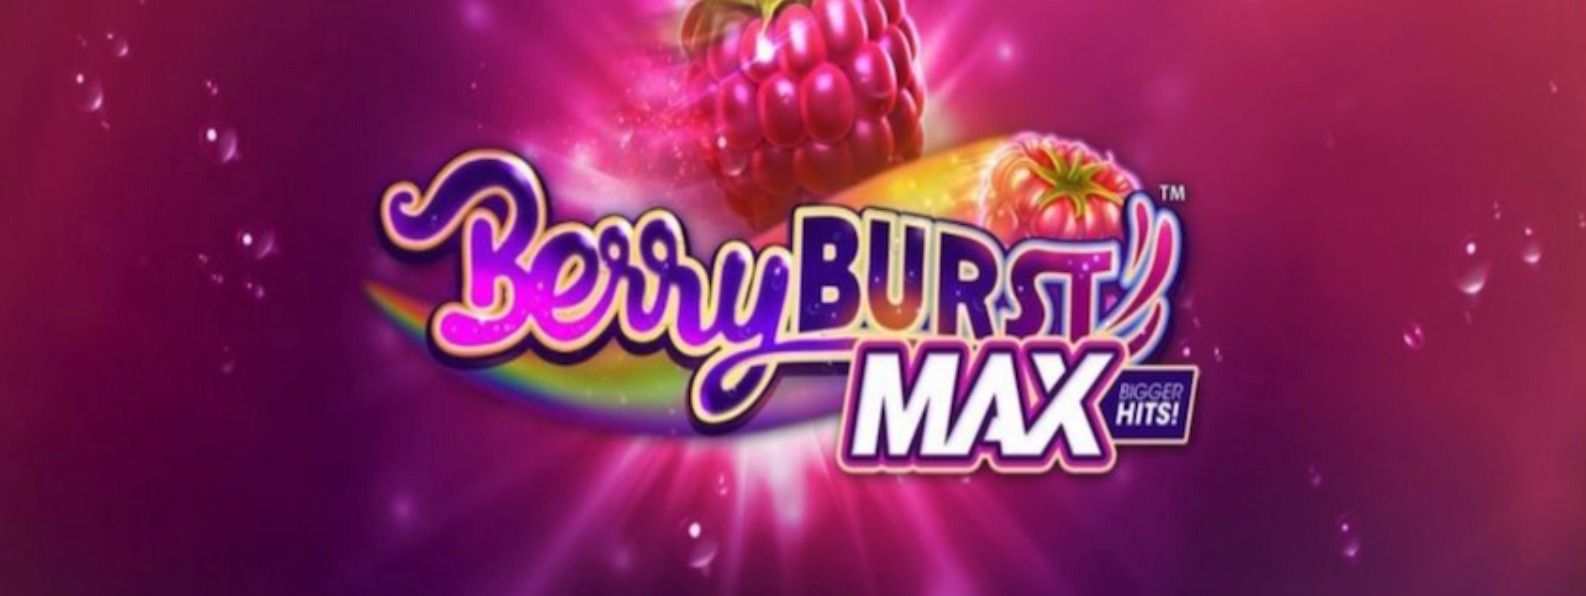 Berryburst max